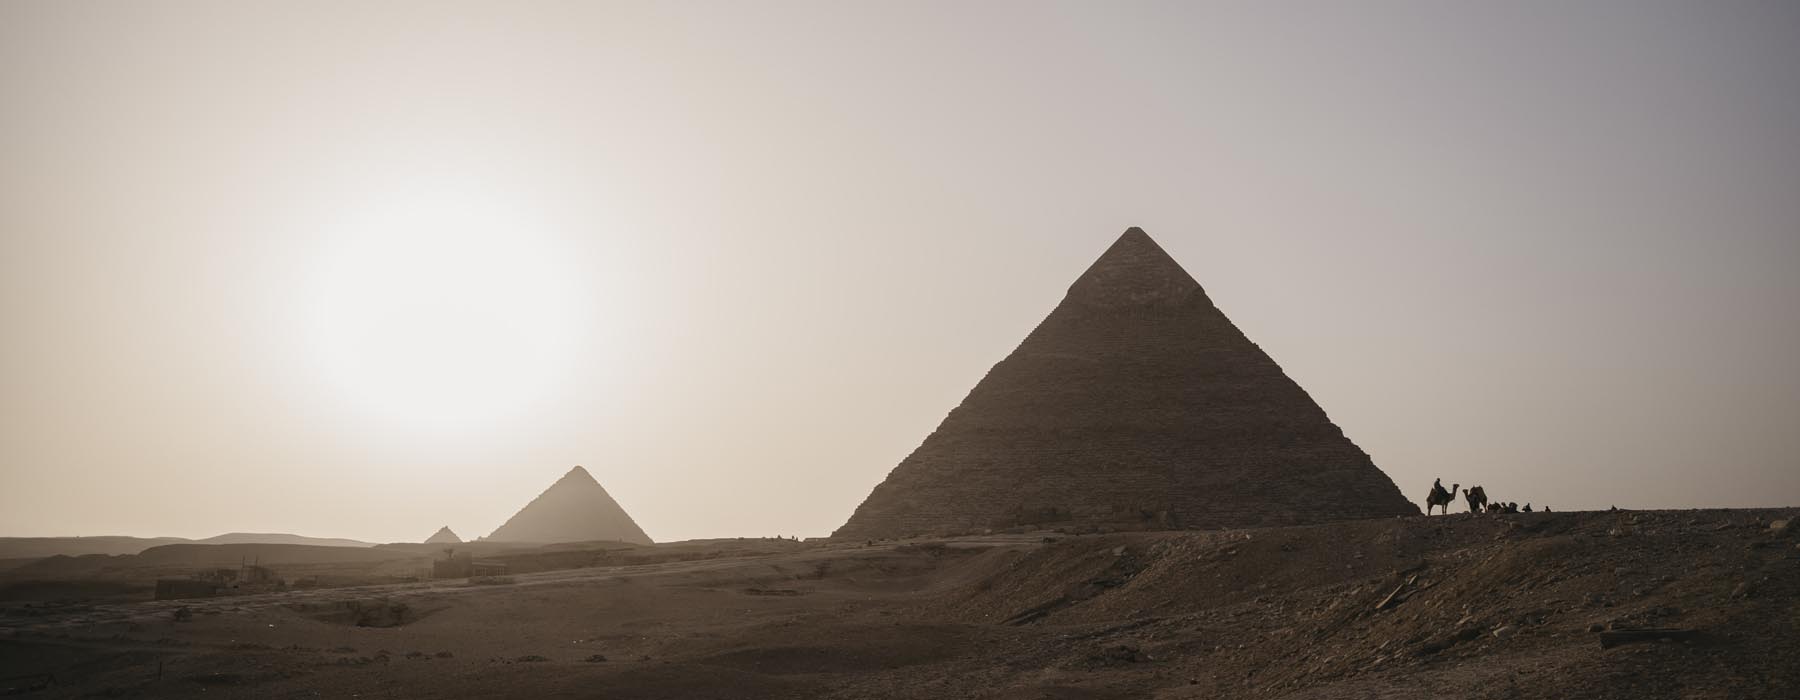  Pyramids of Giza Holidays